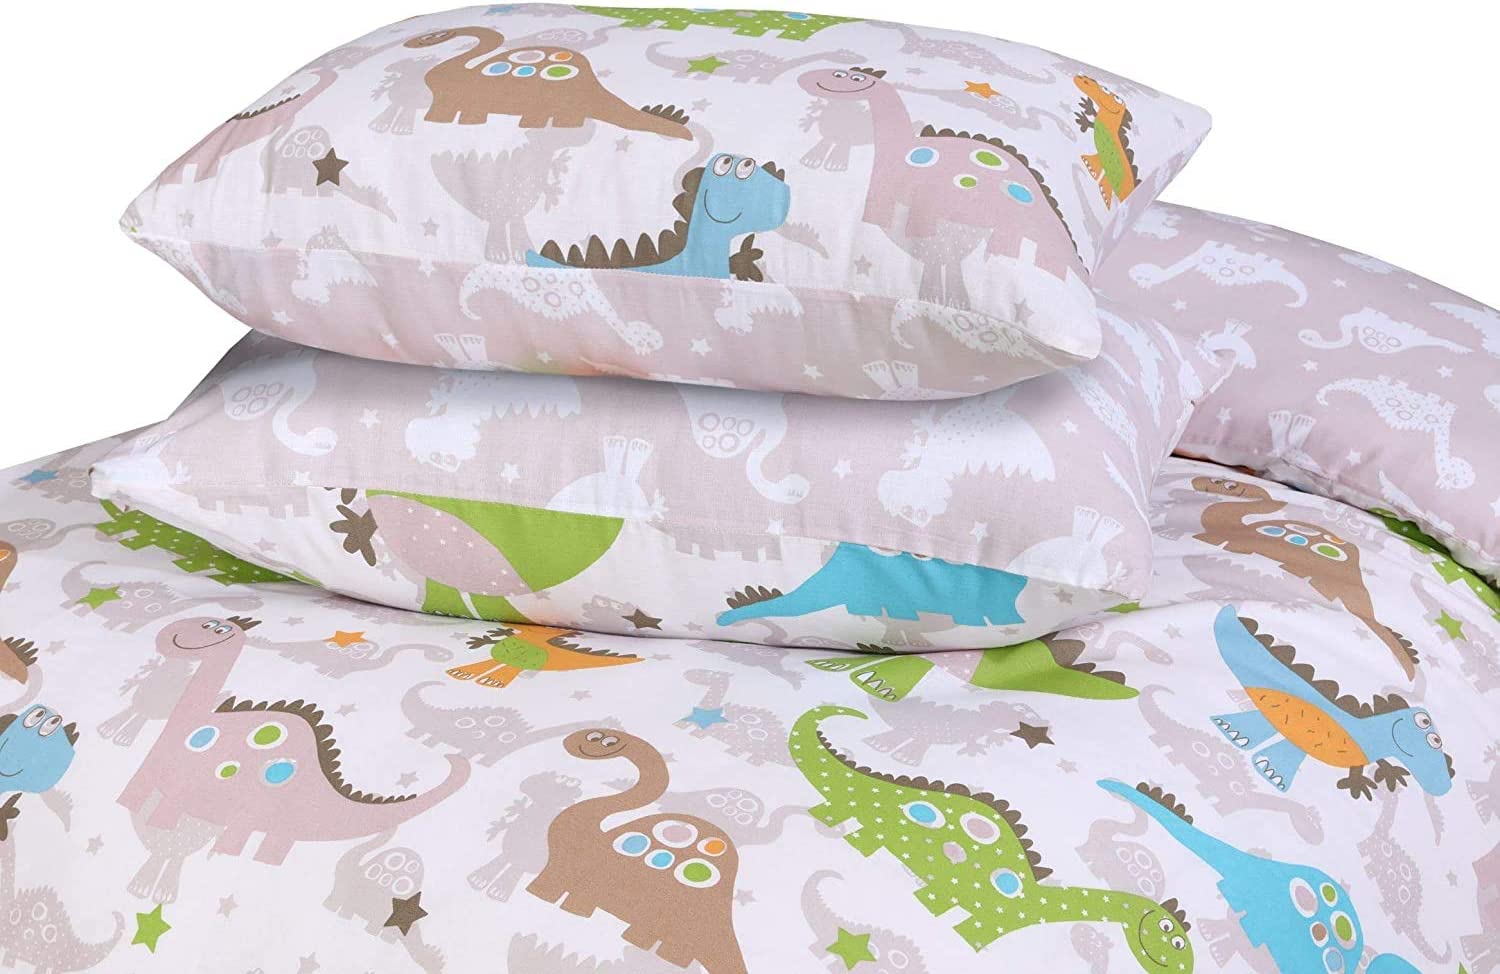 Kids Bedding Sets - 100% Soft Cotton